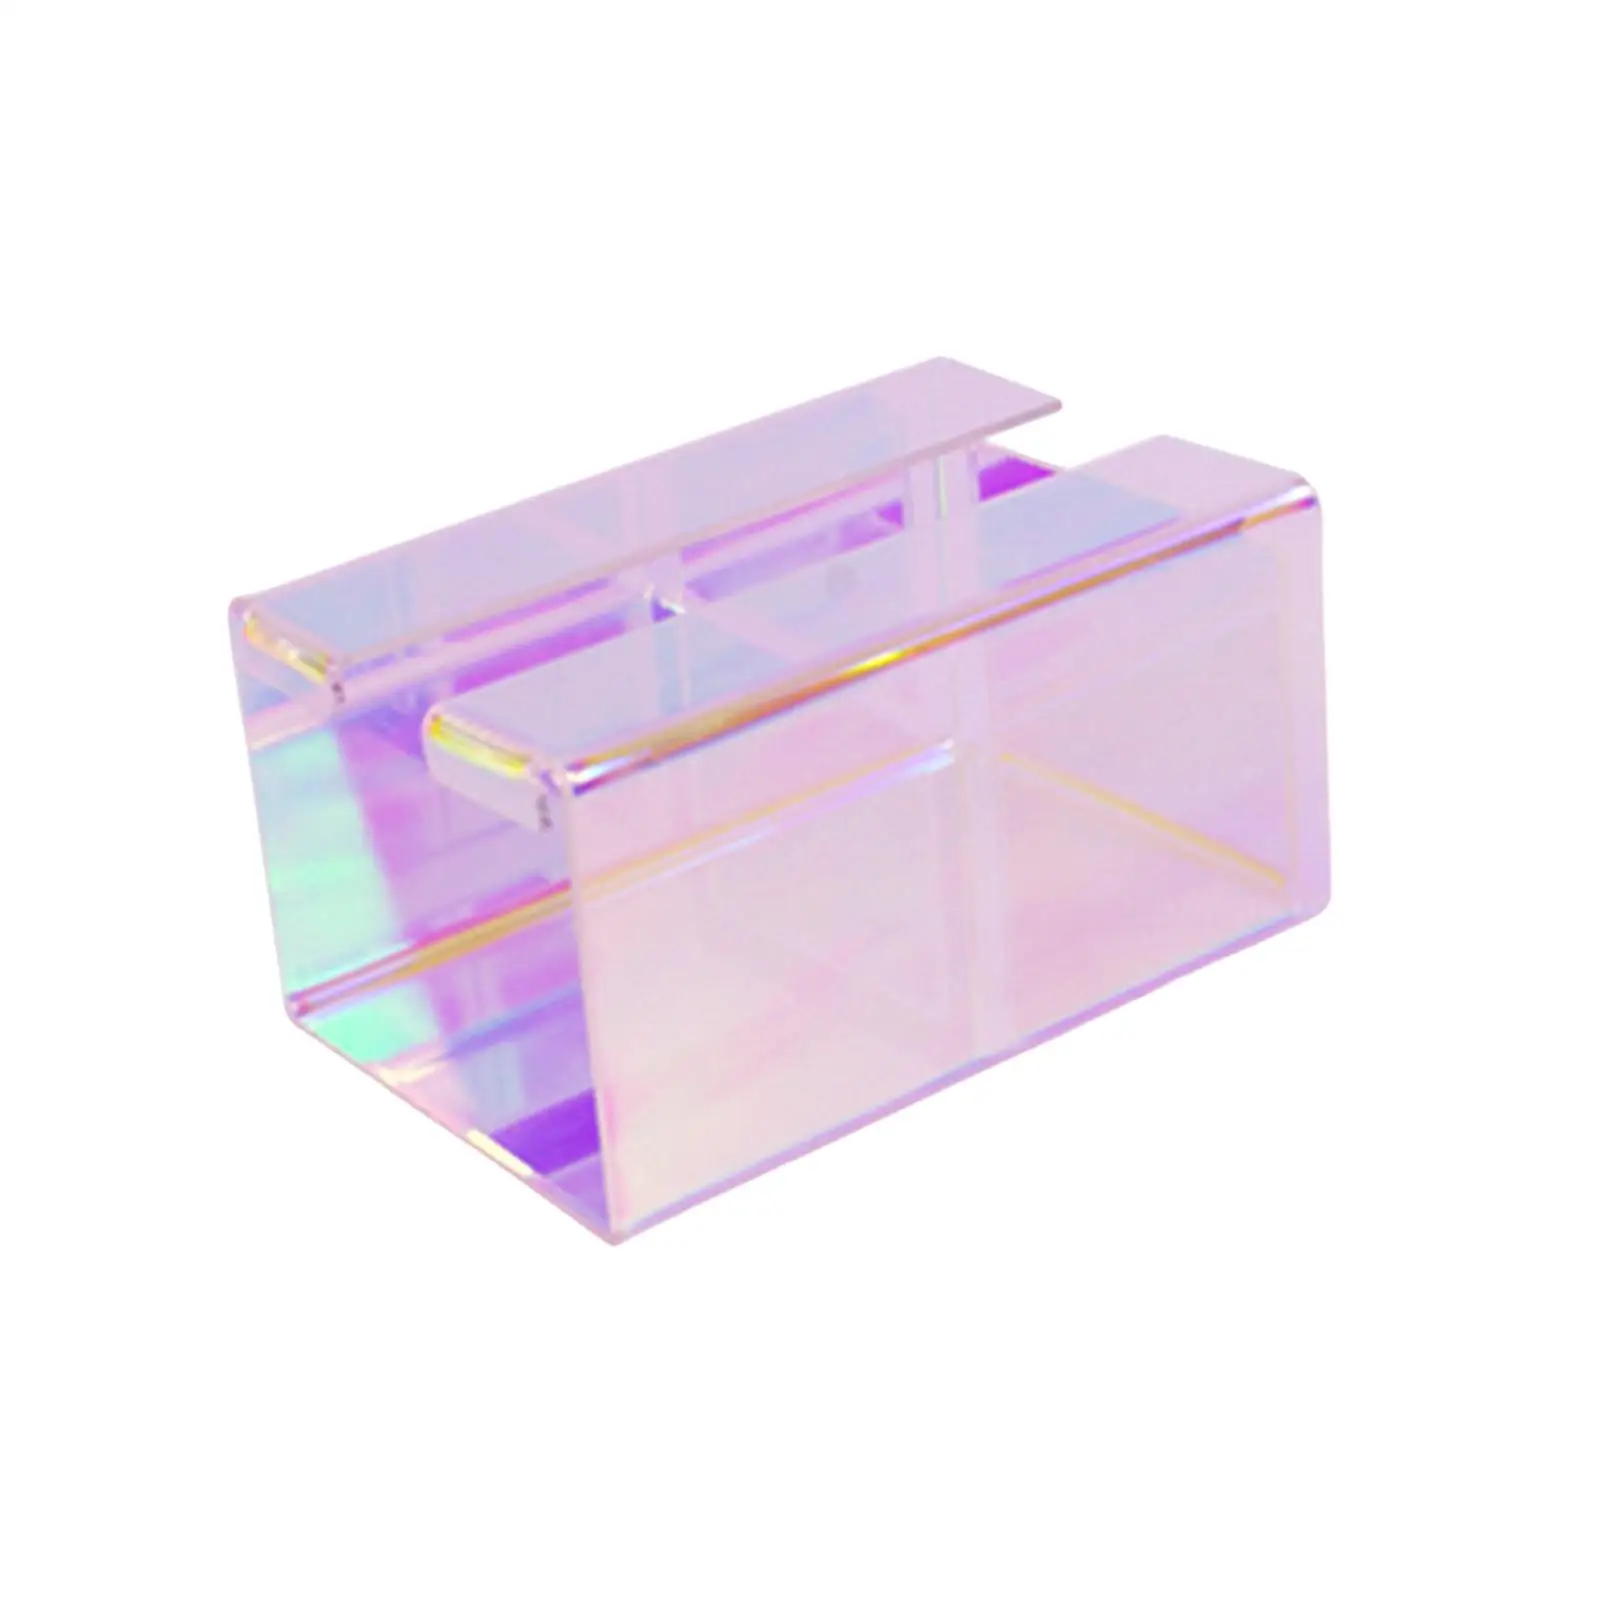 Paper box Modern Desktop Organizer Rectangular Clear Acrylic Tissue Box